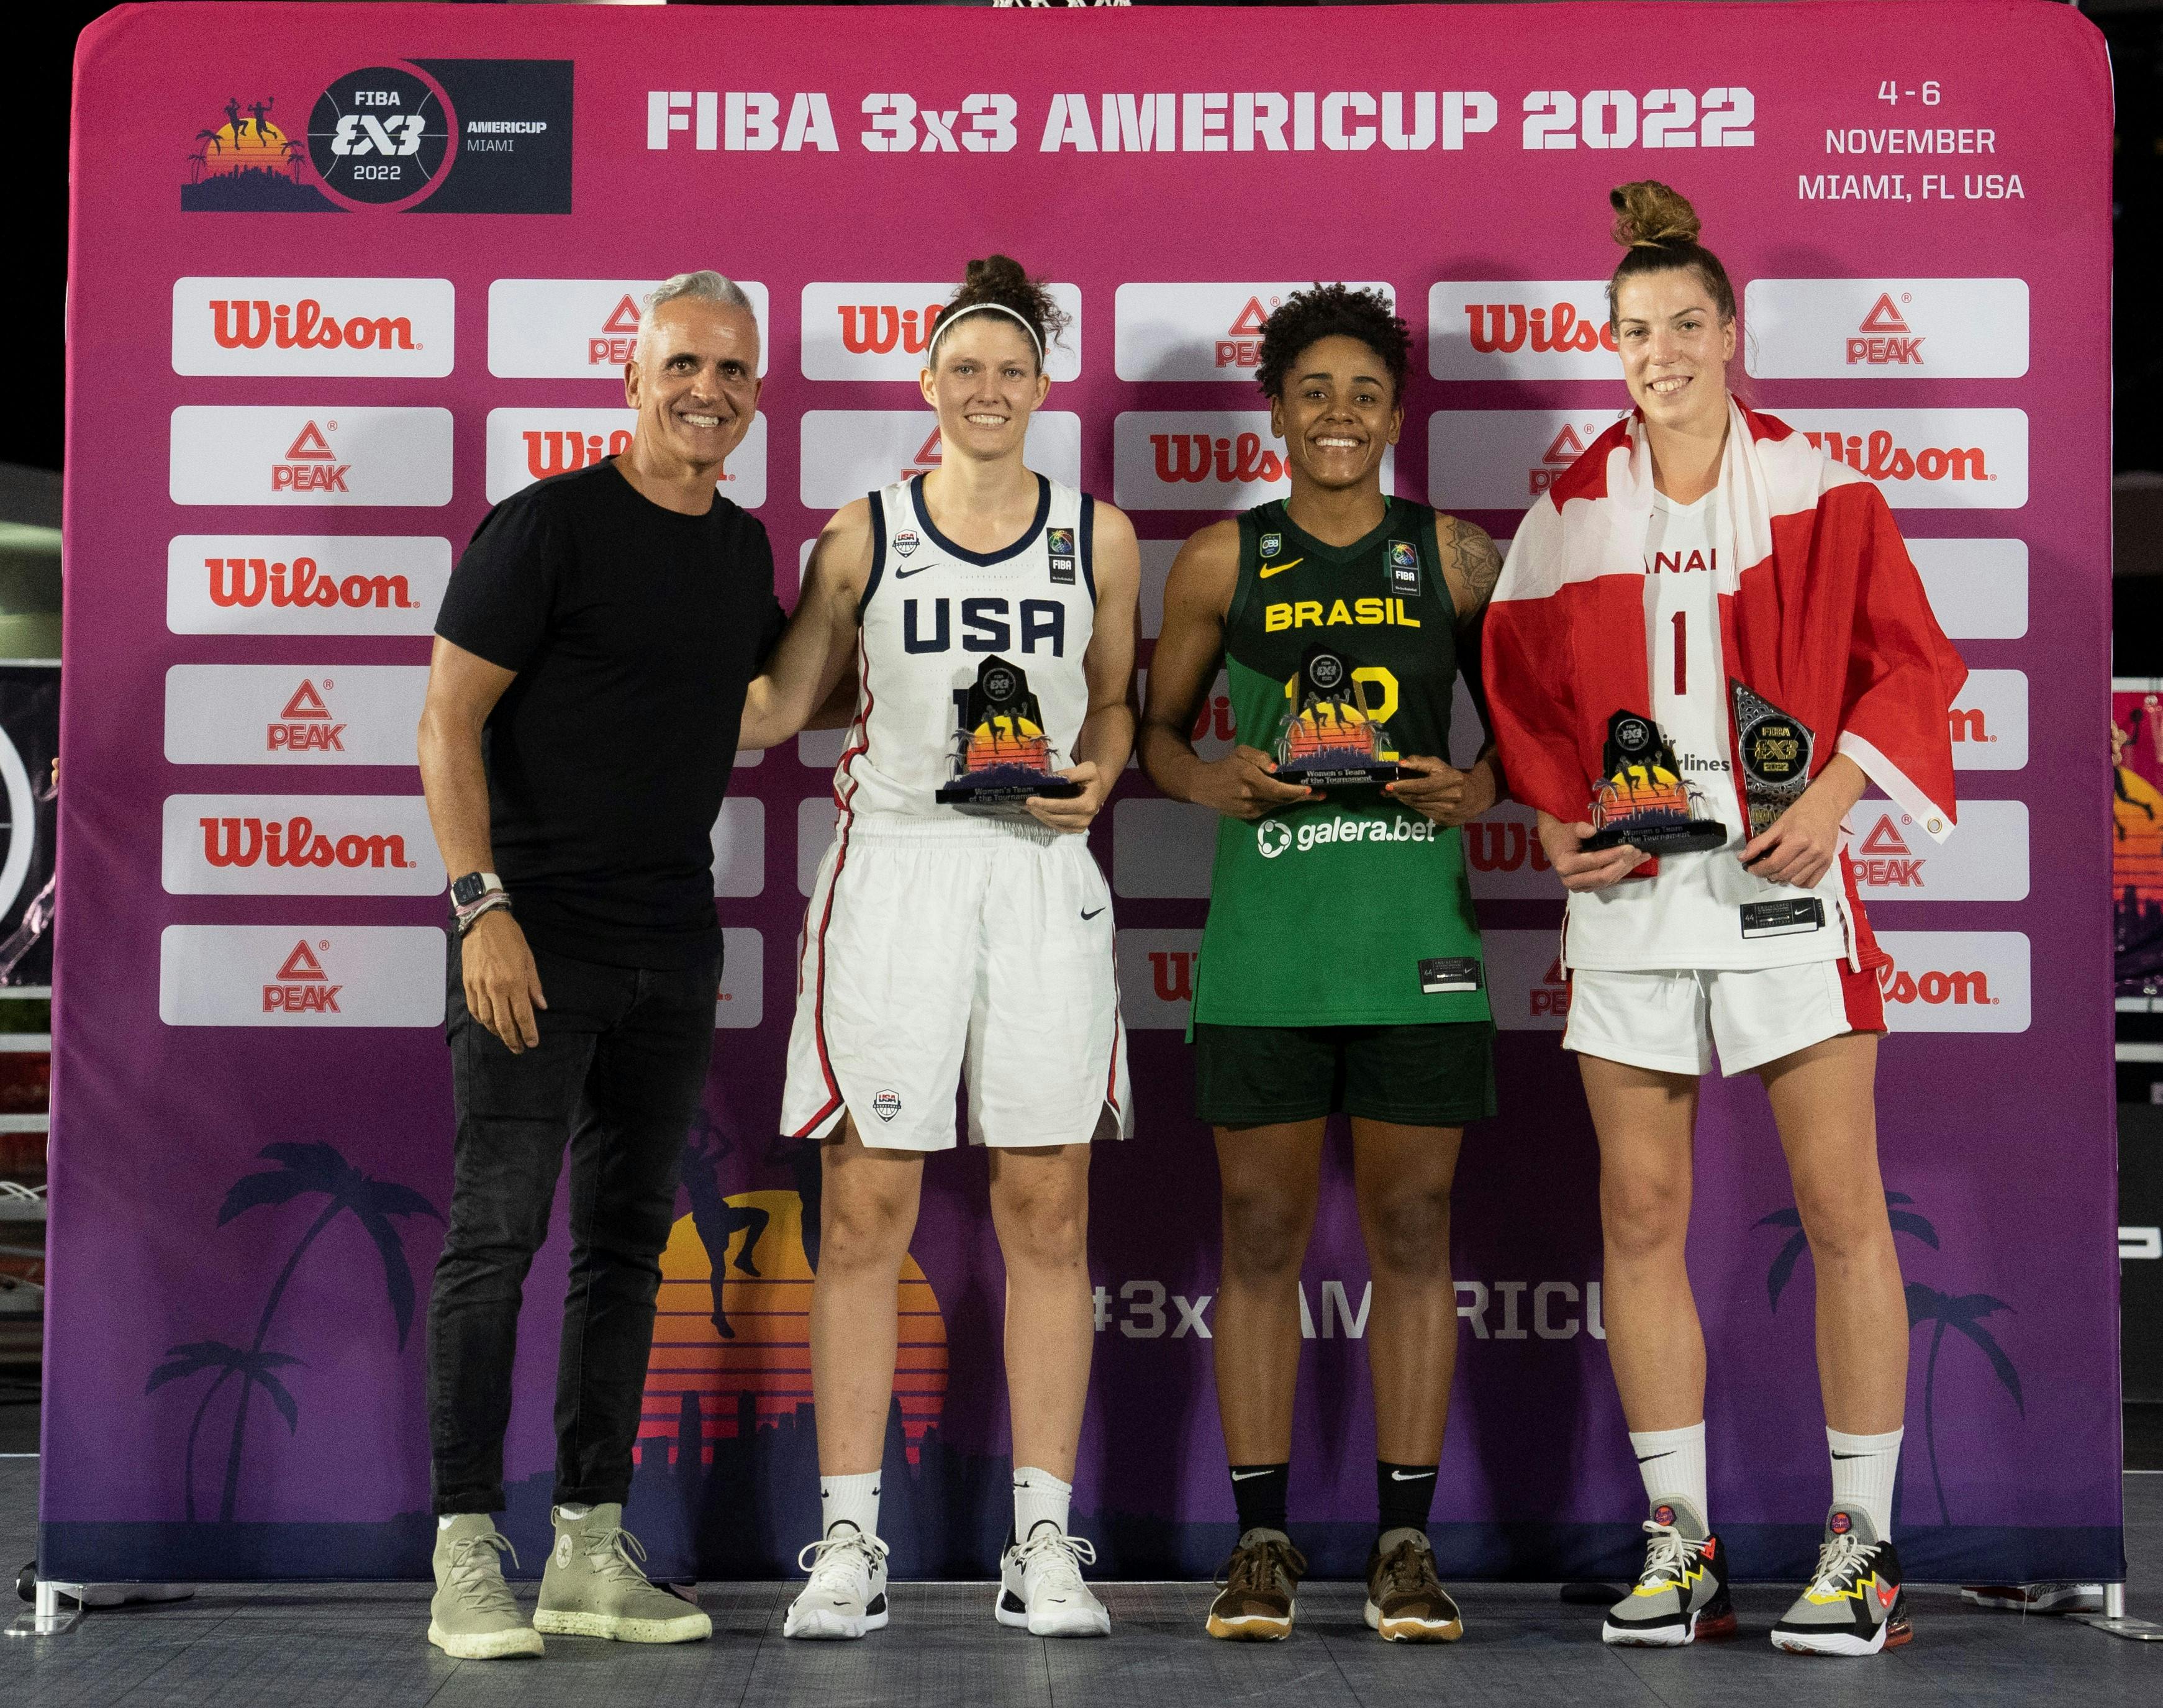 Overview FIBA 3x3 AmeriCup 2022